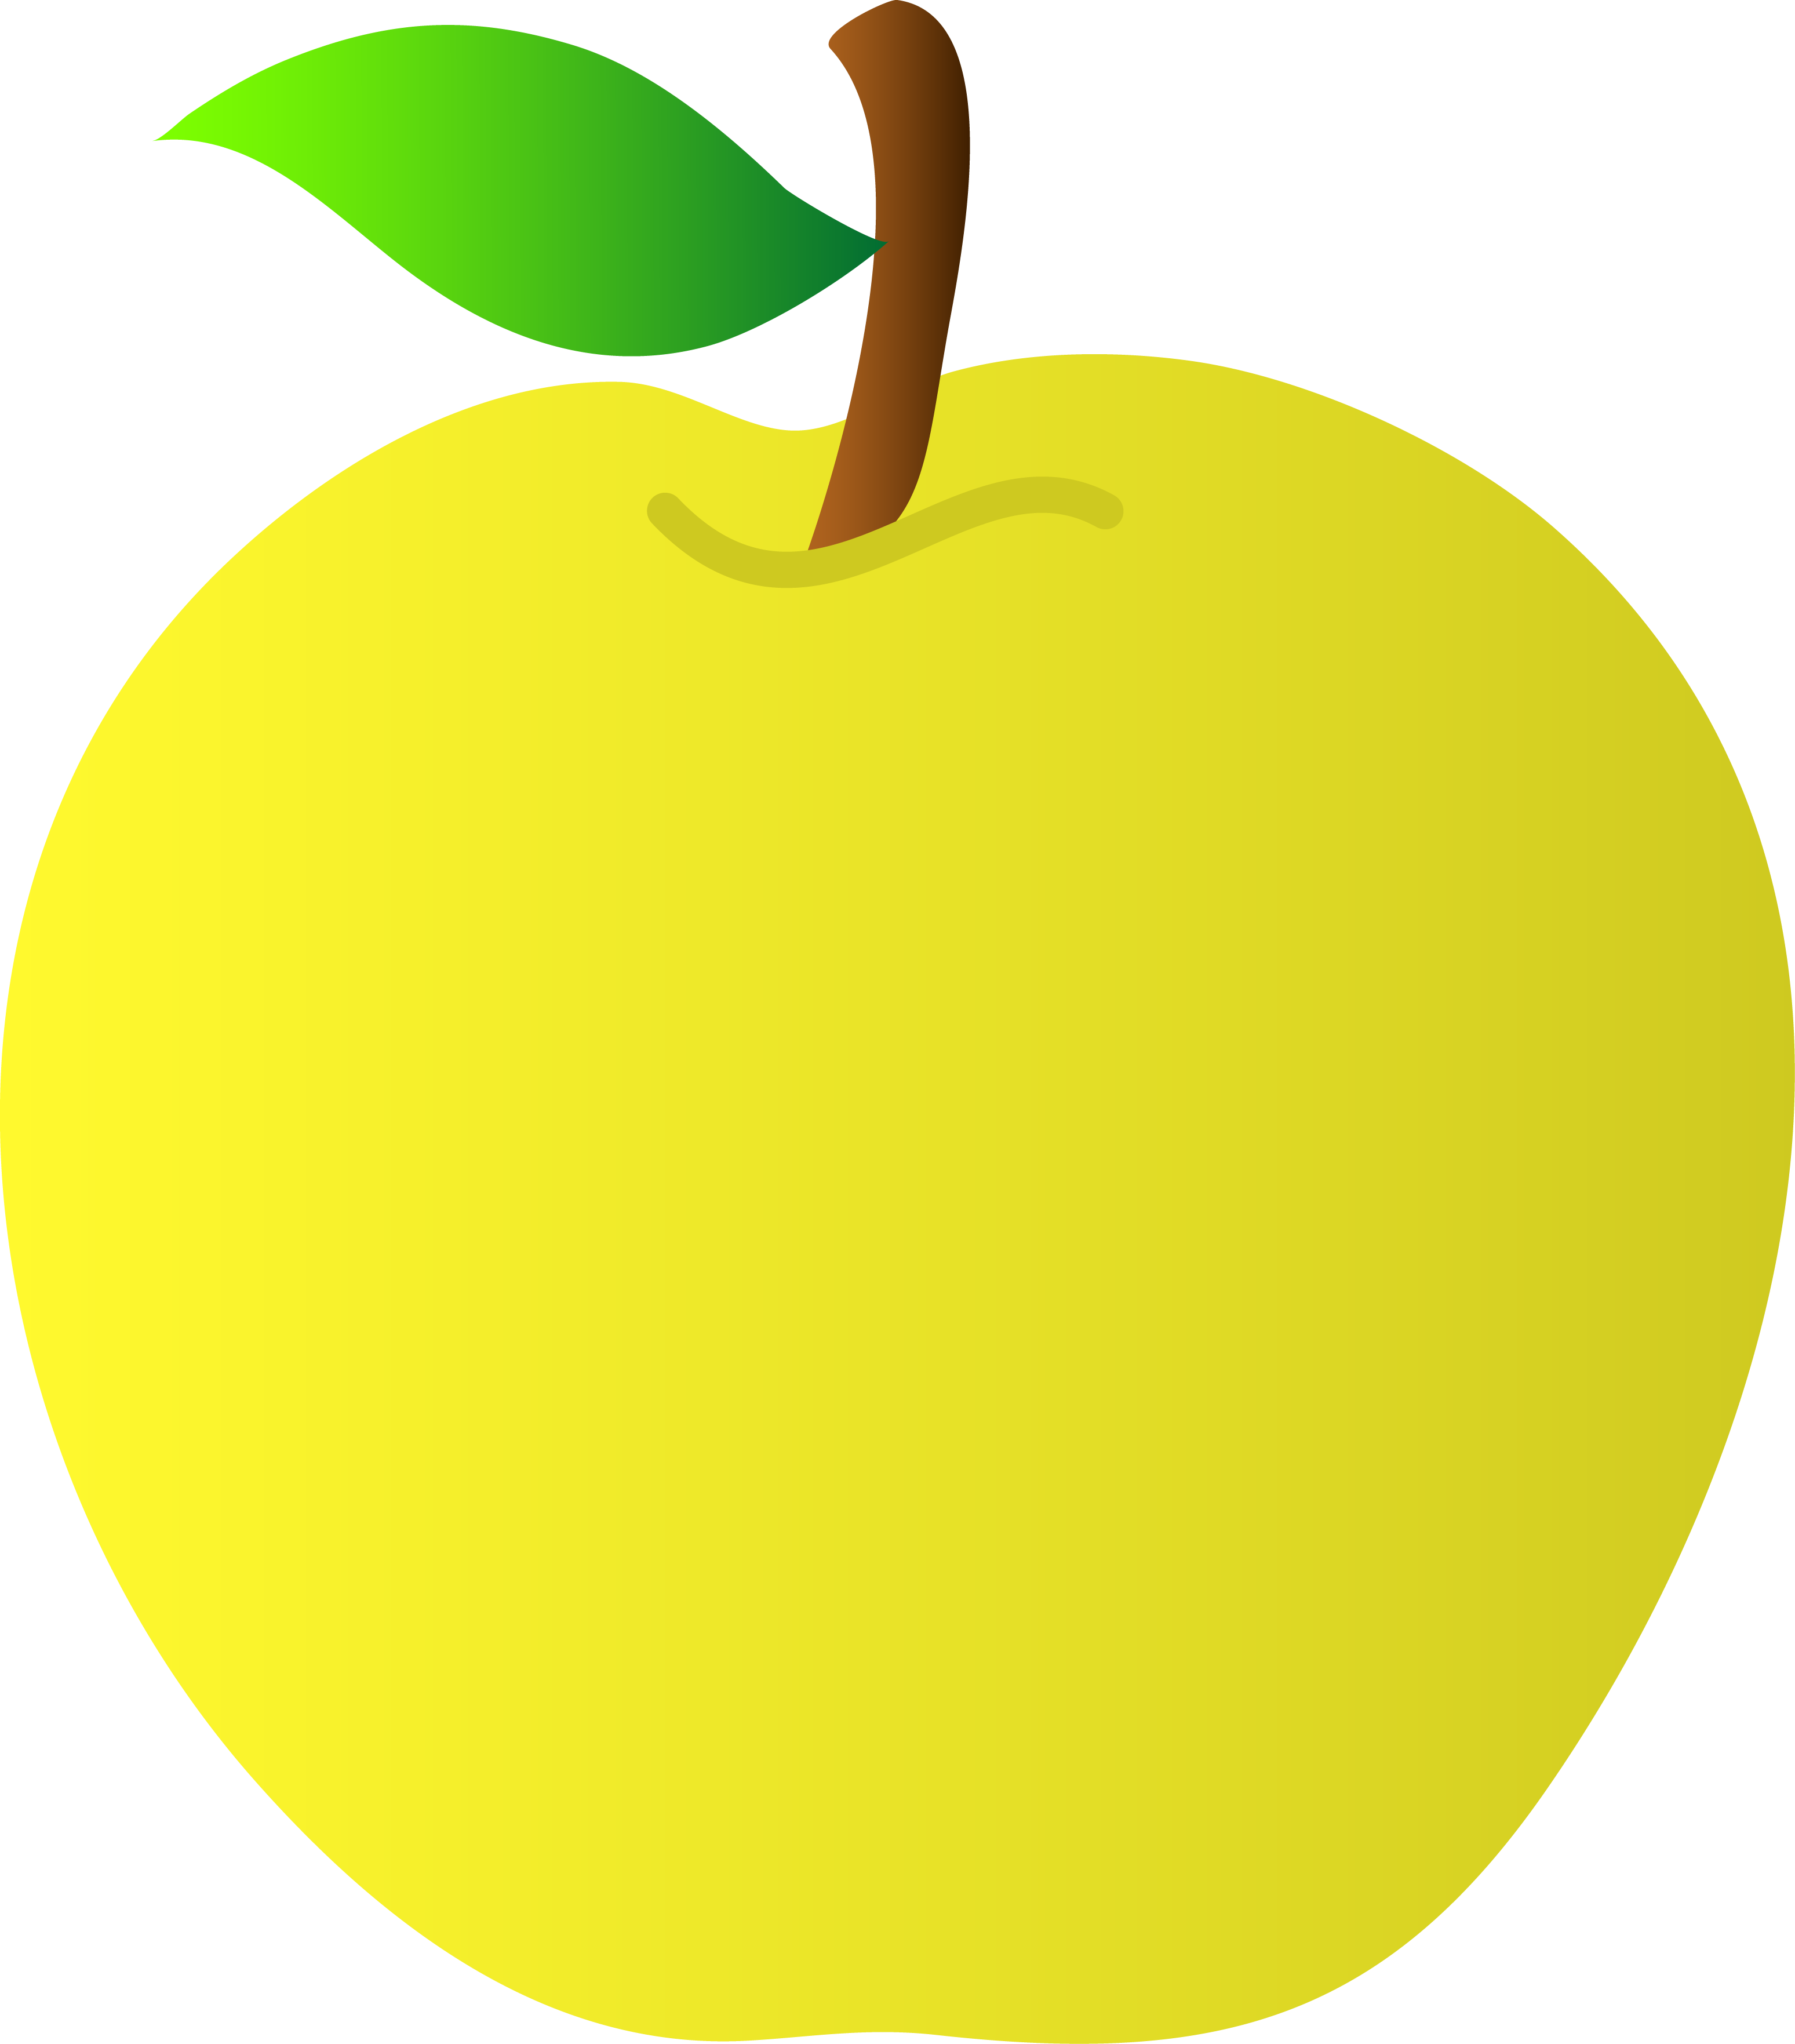 Yellow Apple Vector Art - Free Clip Art